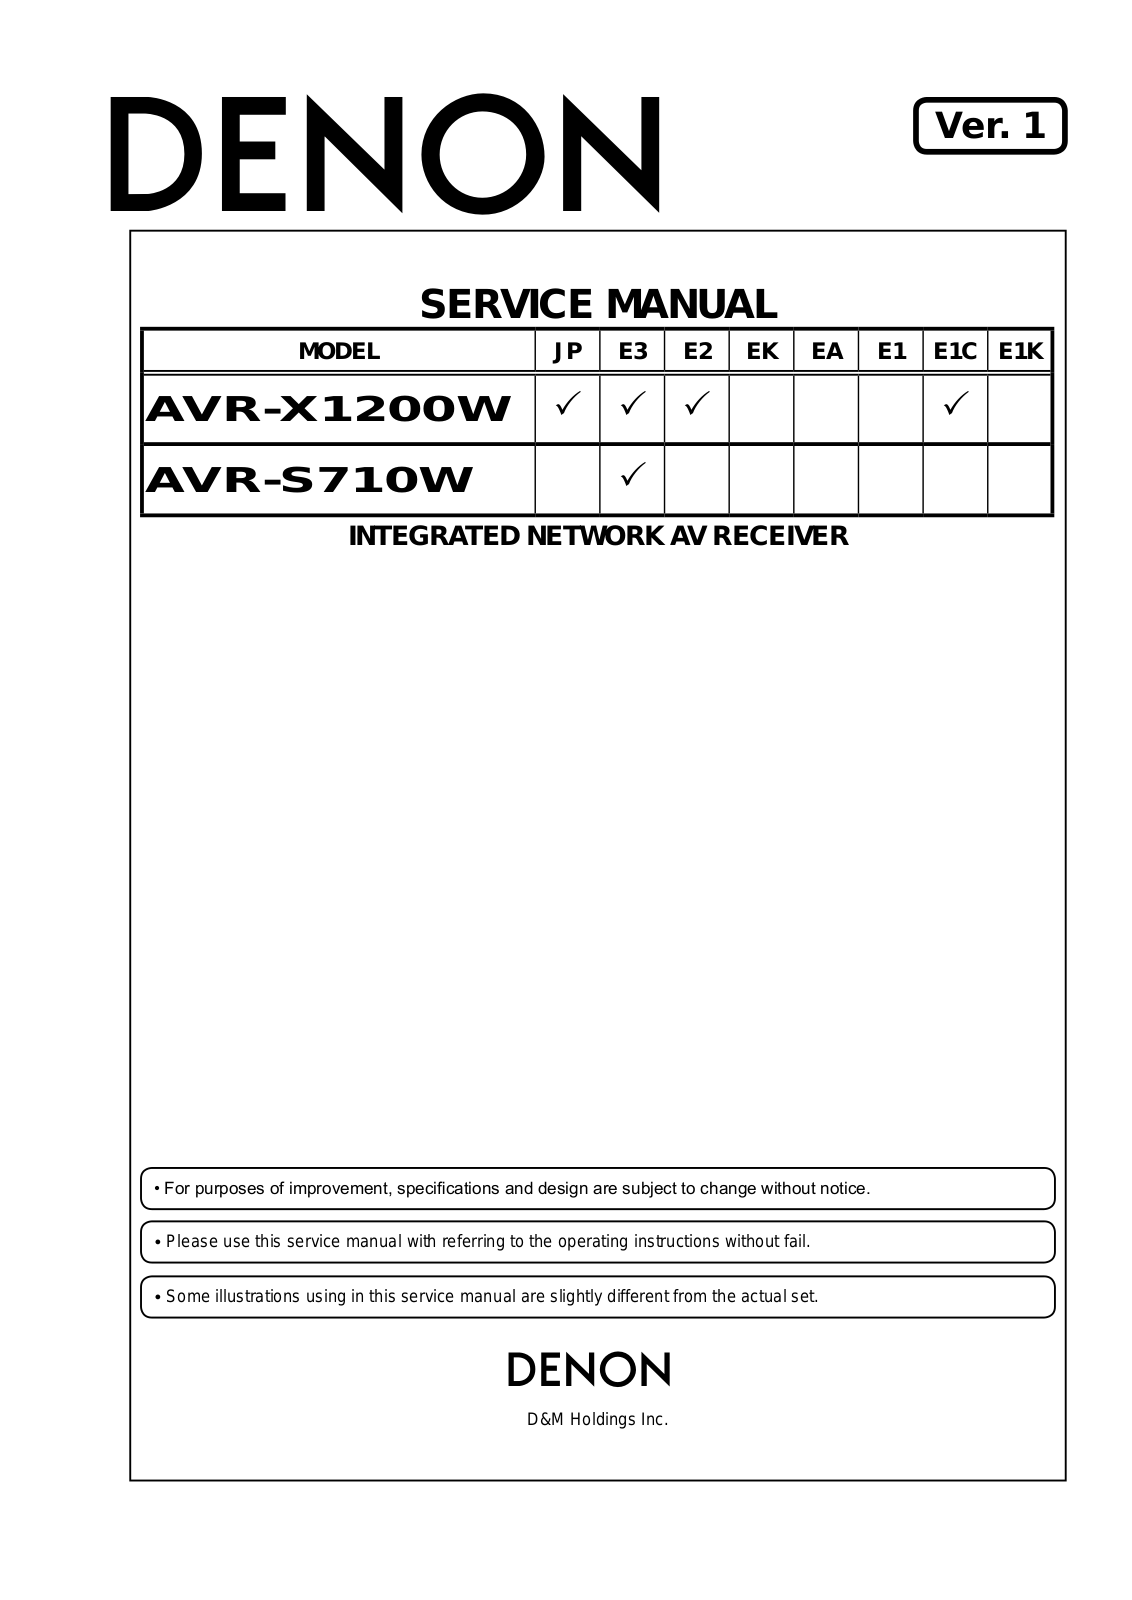 Denon AVR-X1200W, AVR-S710W Service manual